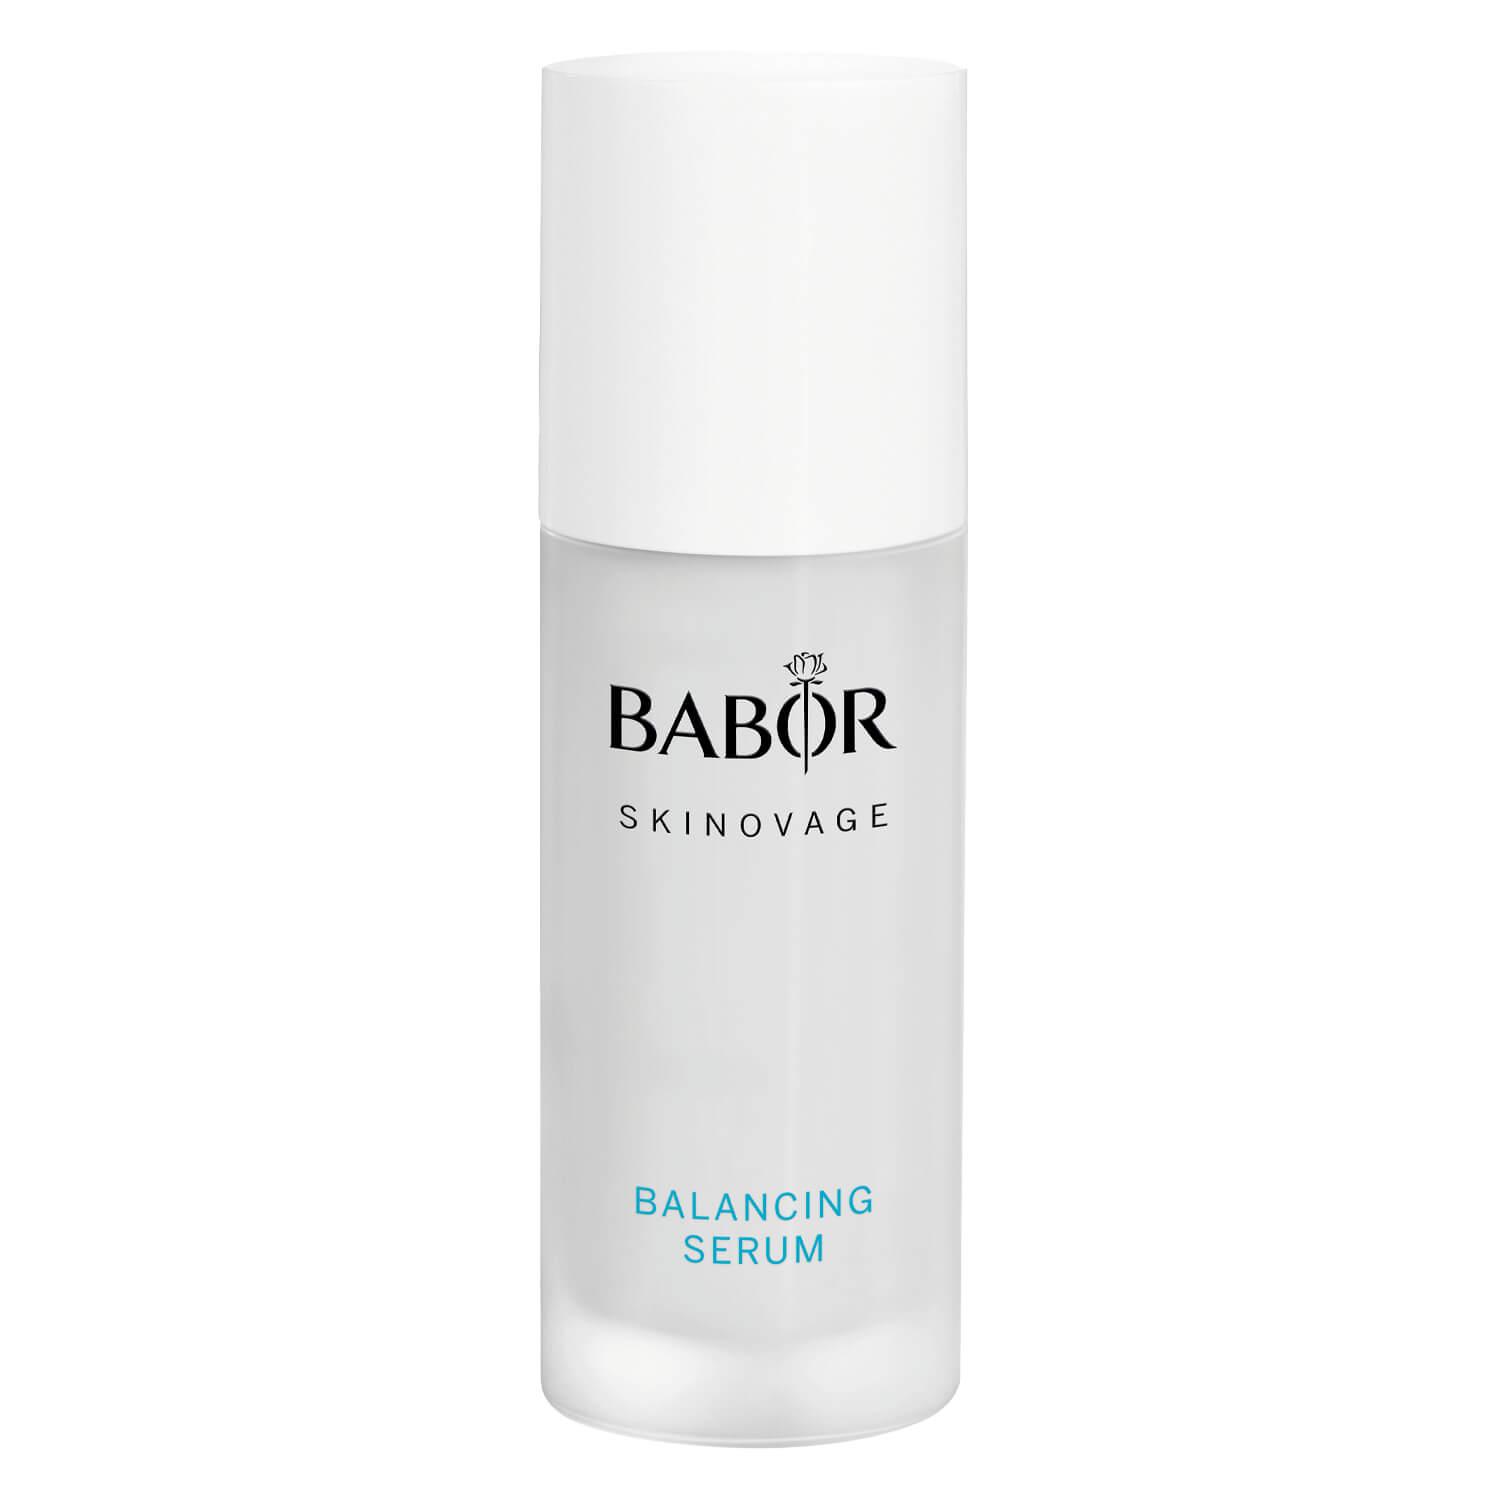 BABOR SKINOVAGE - Balancing Serum Combination Skin